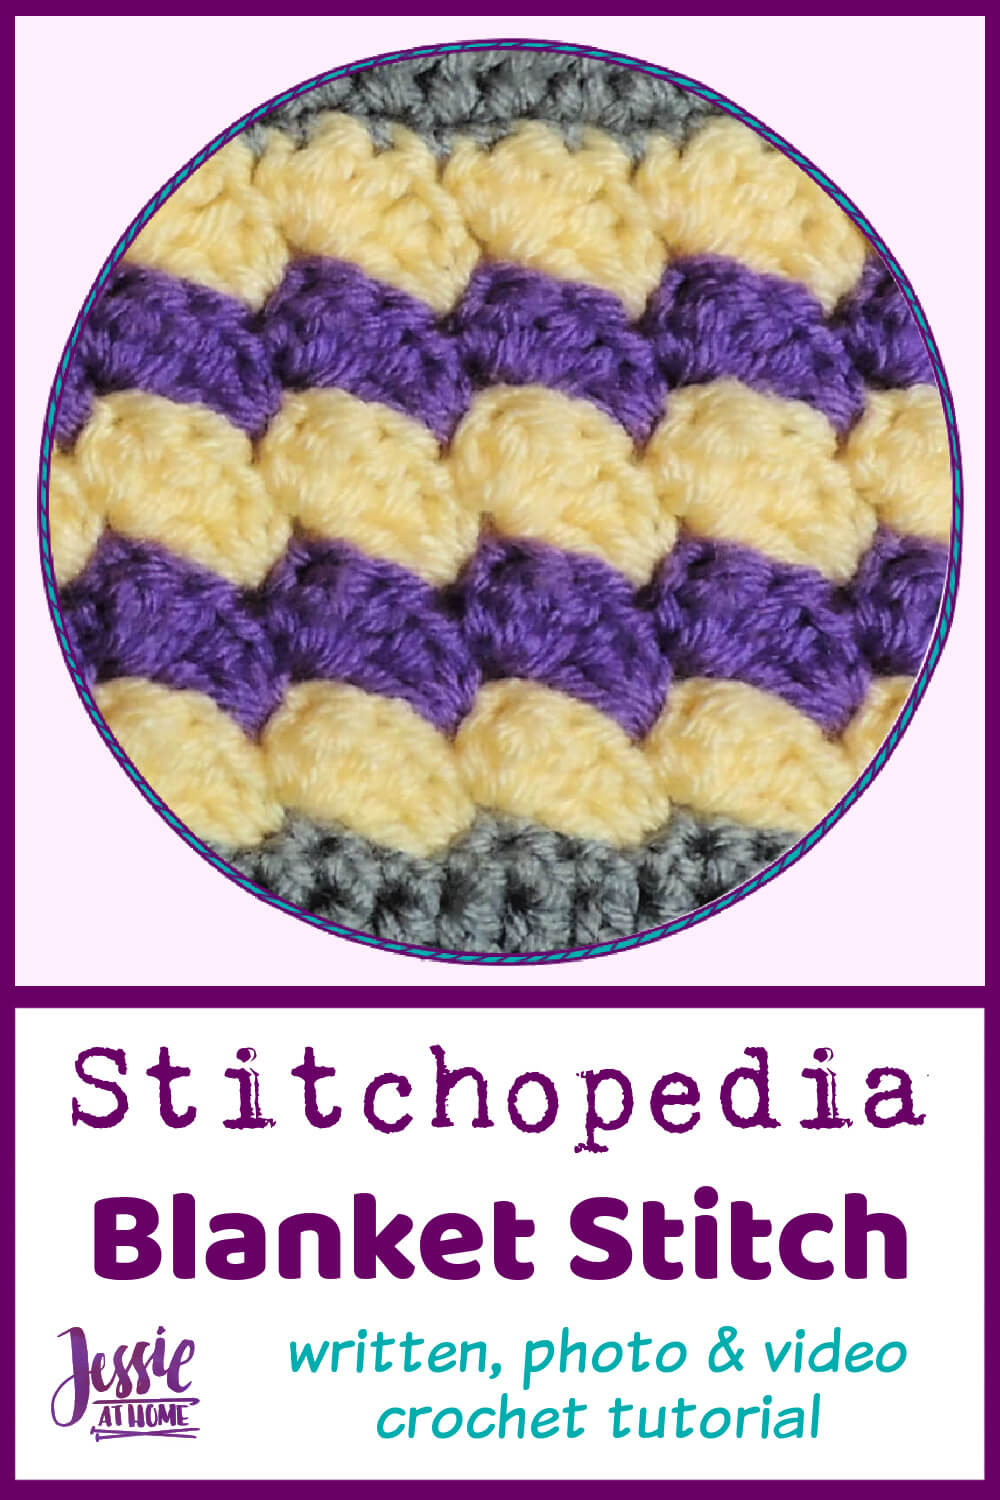 Blanket Stitch - written, photo, and video crochet tutorial